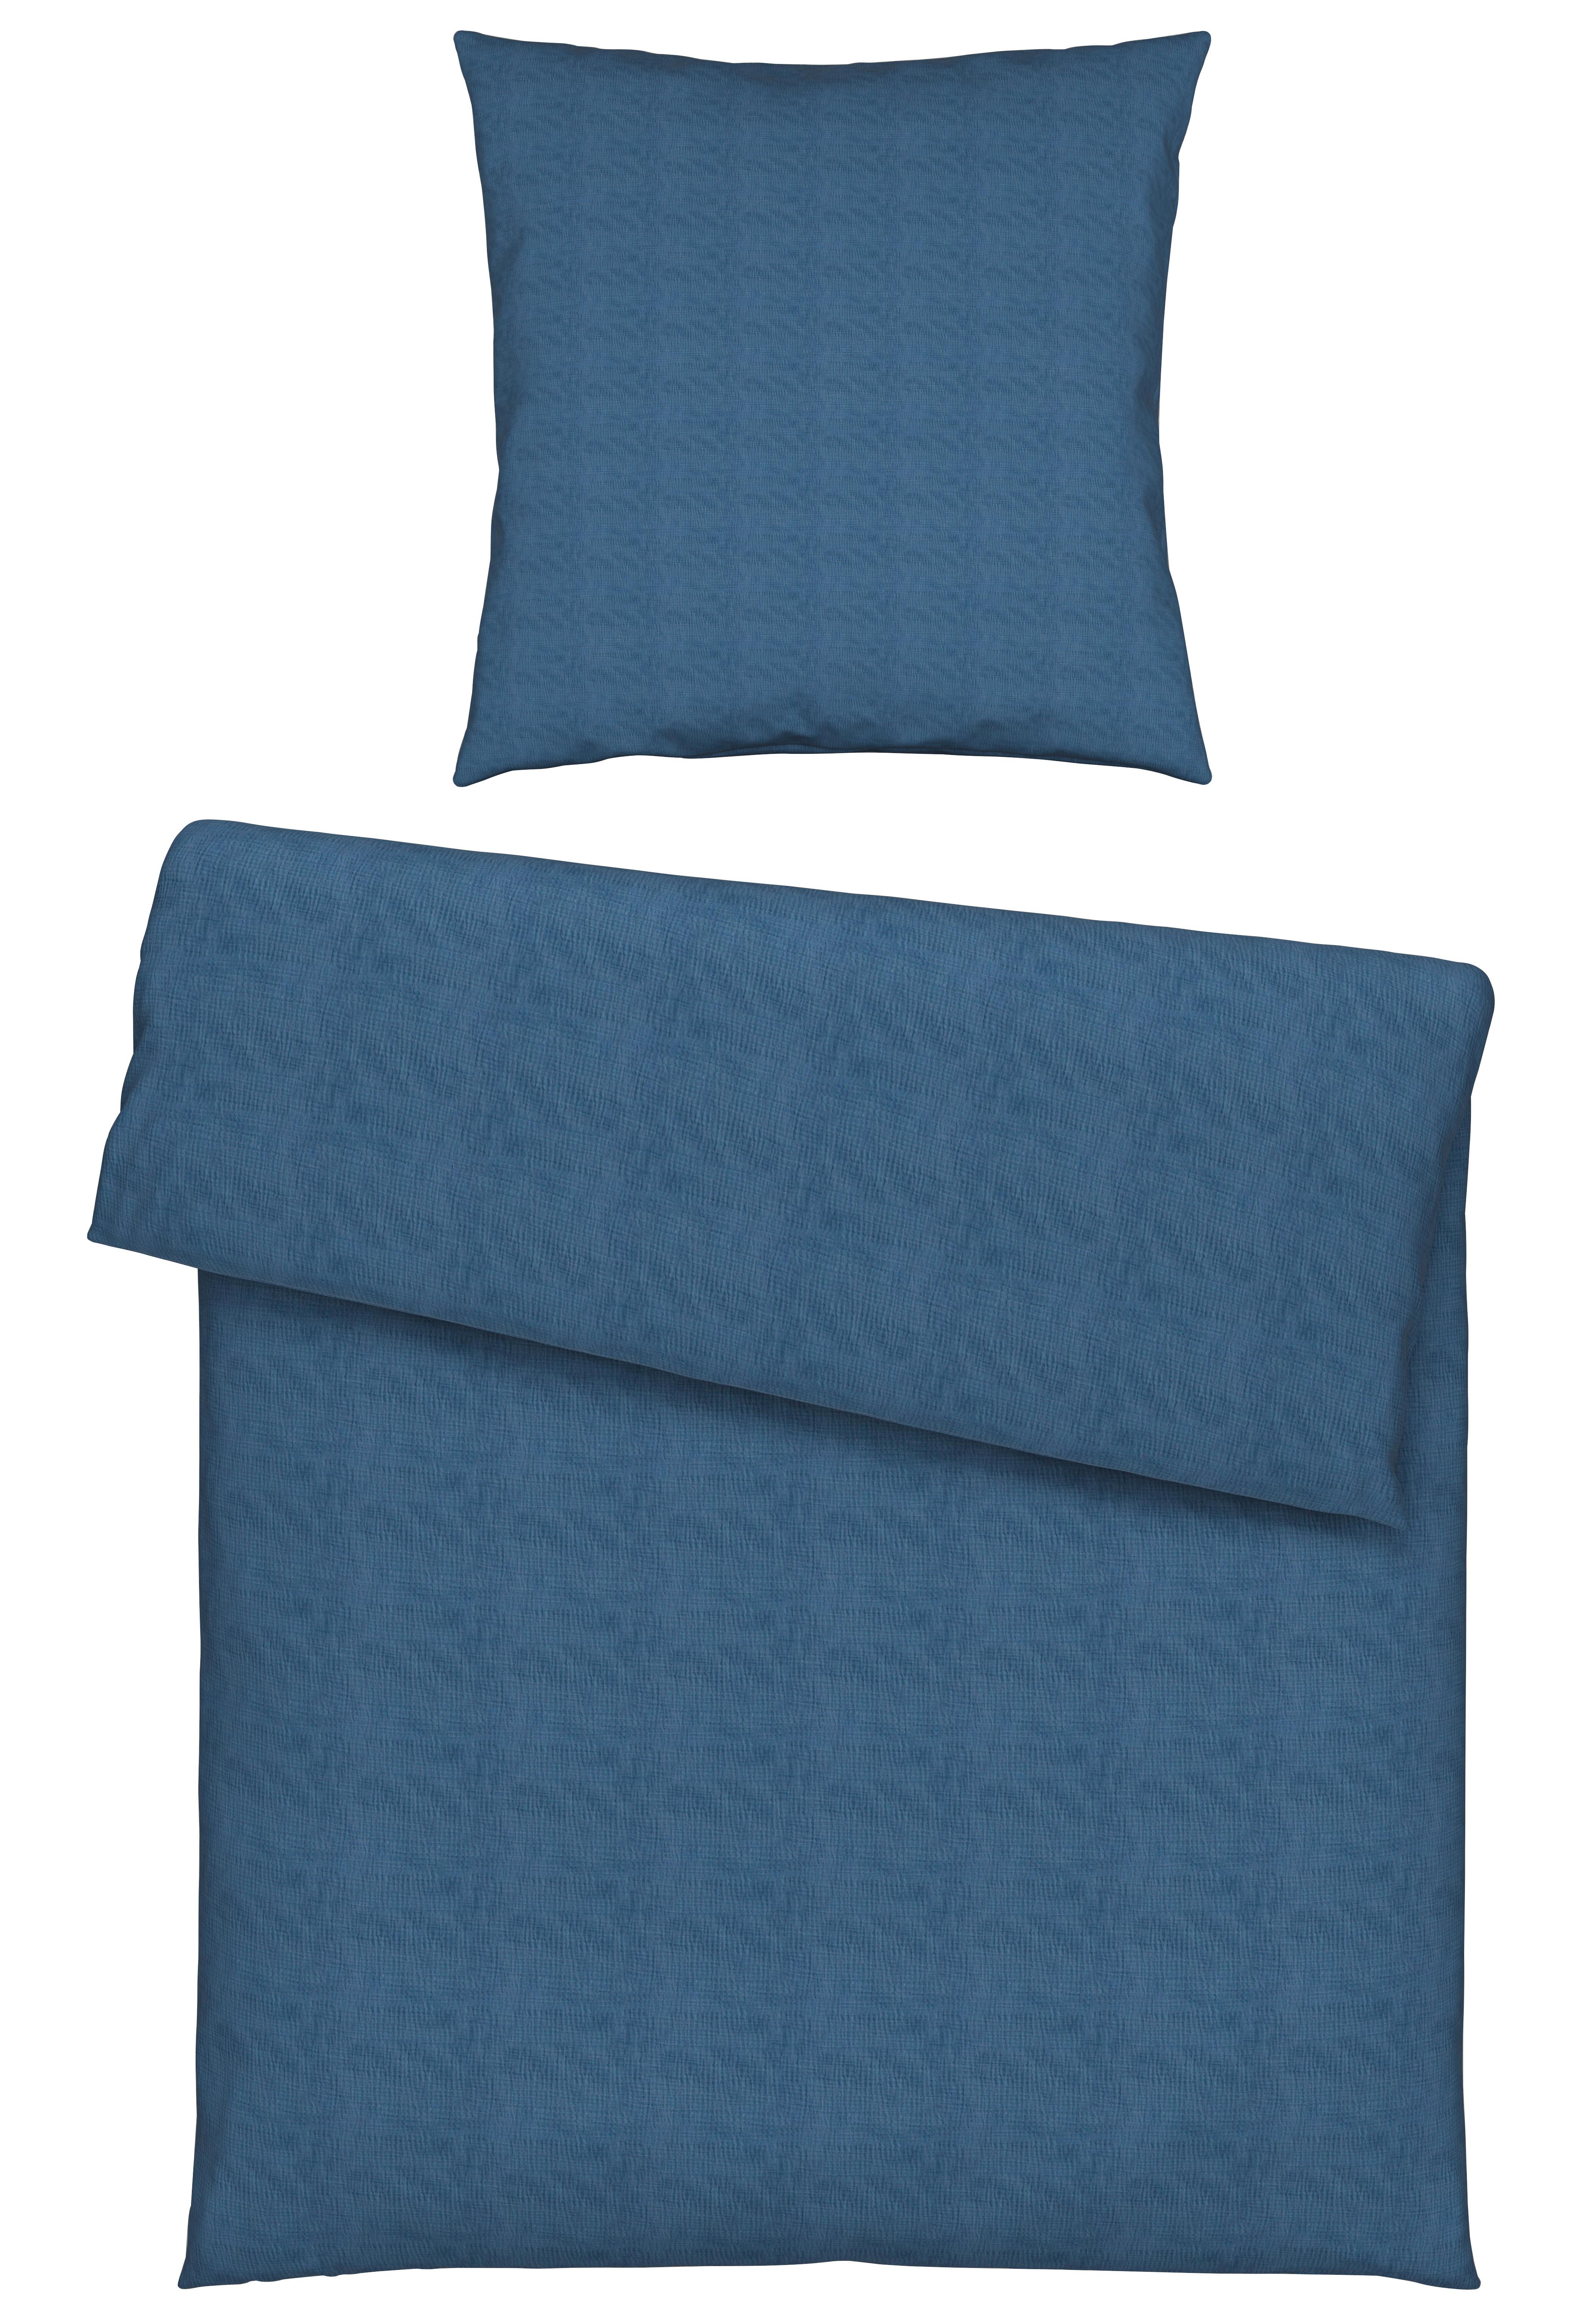 Bettwäsche Melissa in Blau ca. 135x200cm - Blau, MODERN, Textil (135/200cm) - Premium Living